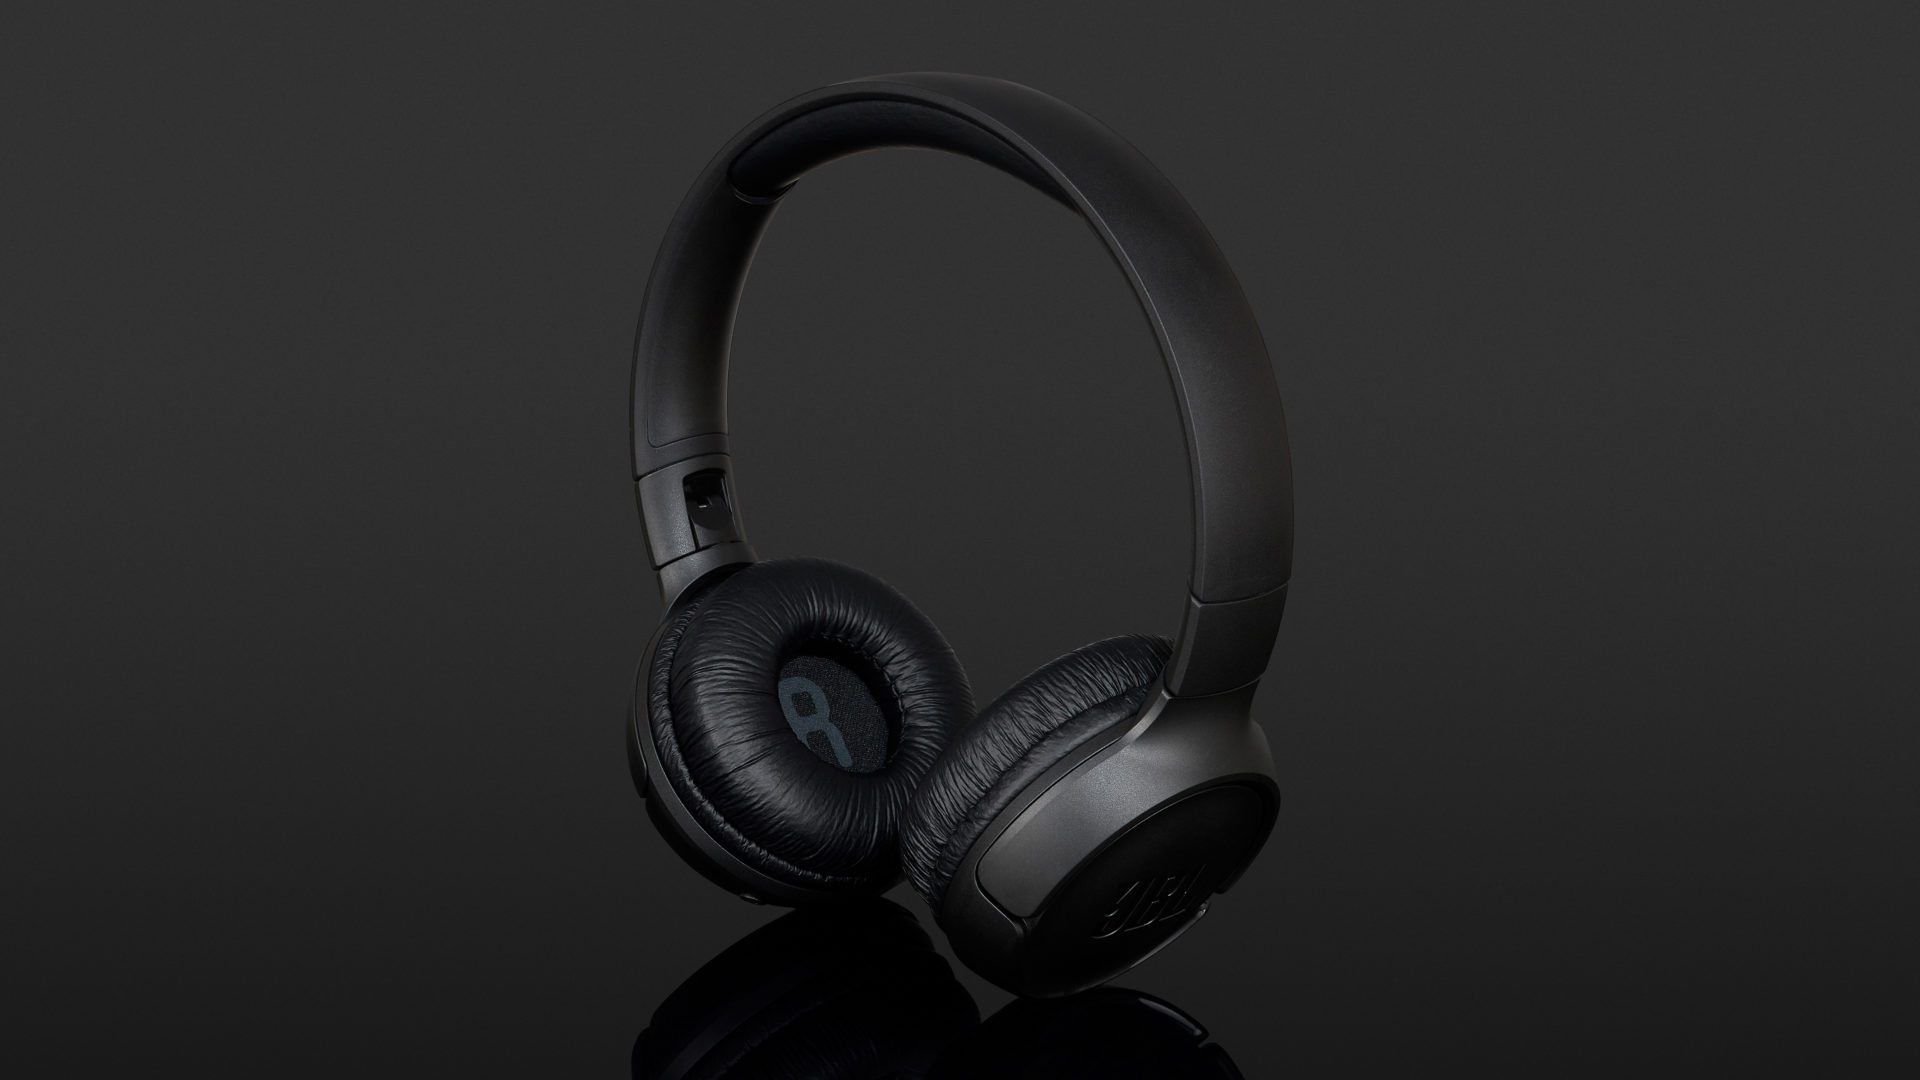  JBL TUNE 500 - Wired On-Ear Headphones - Blue